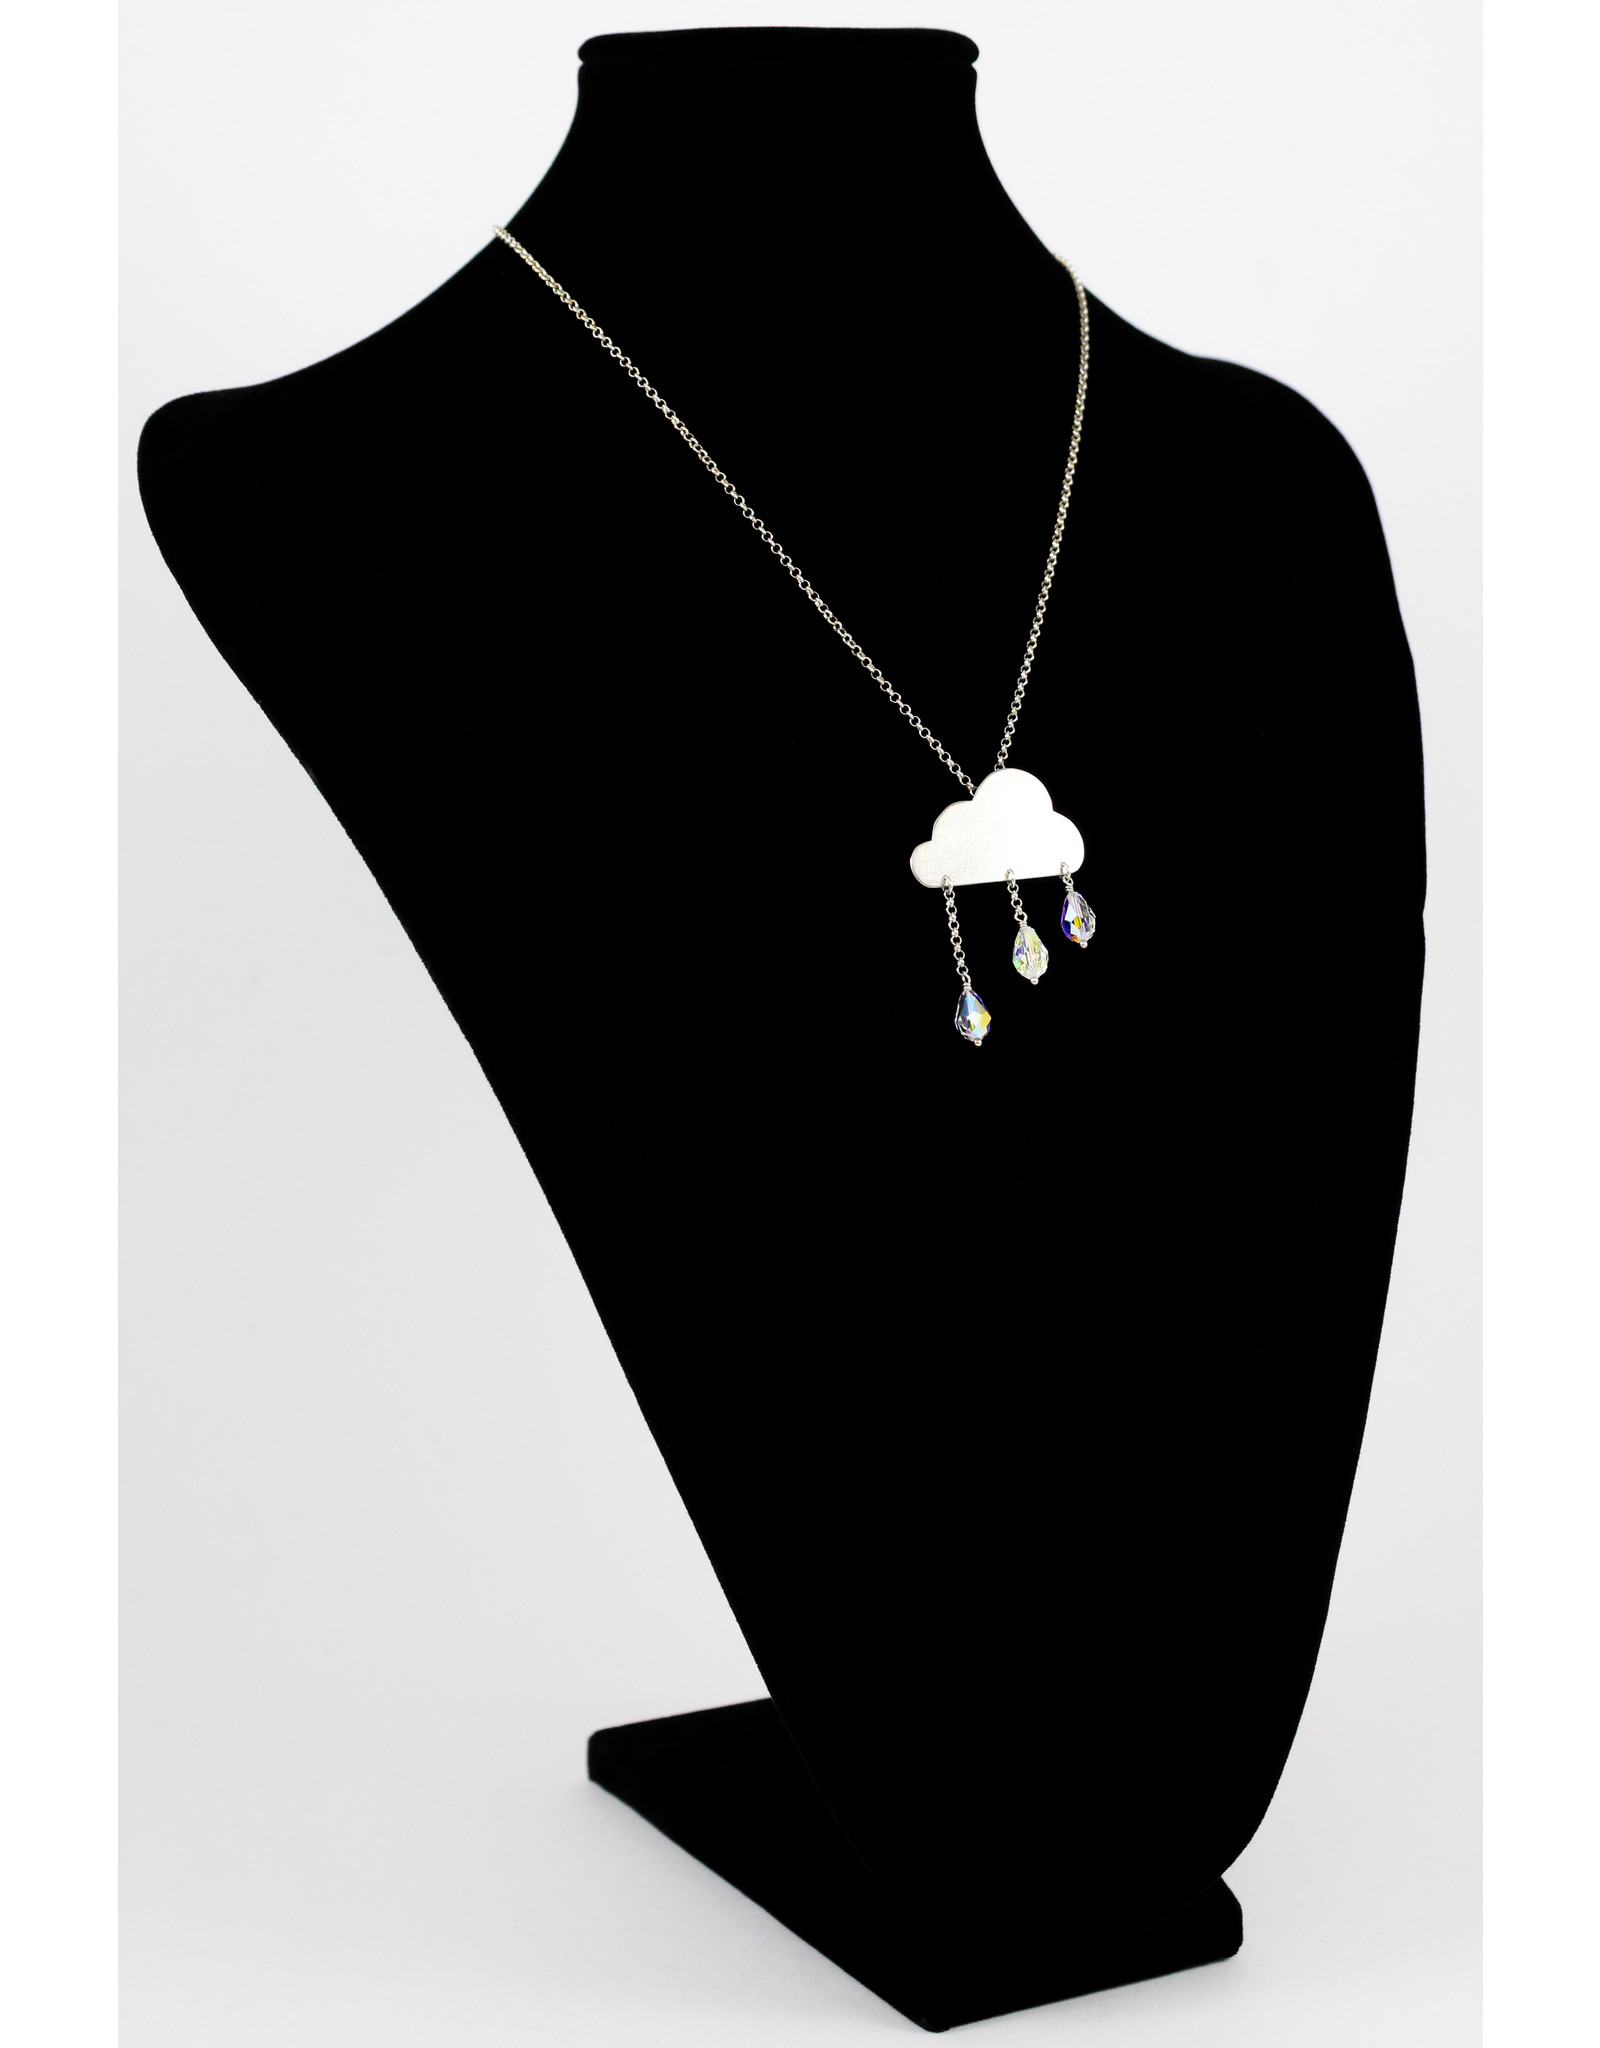 Tasha Matthews Cloud Necklace by Tasha Grace Designs